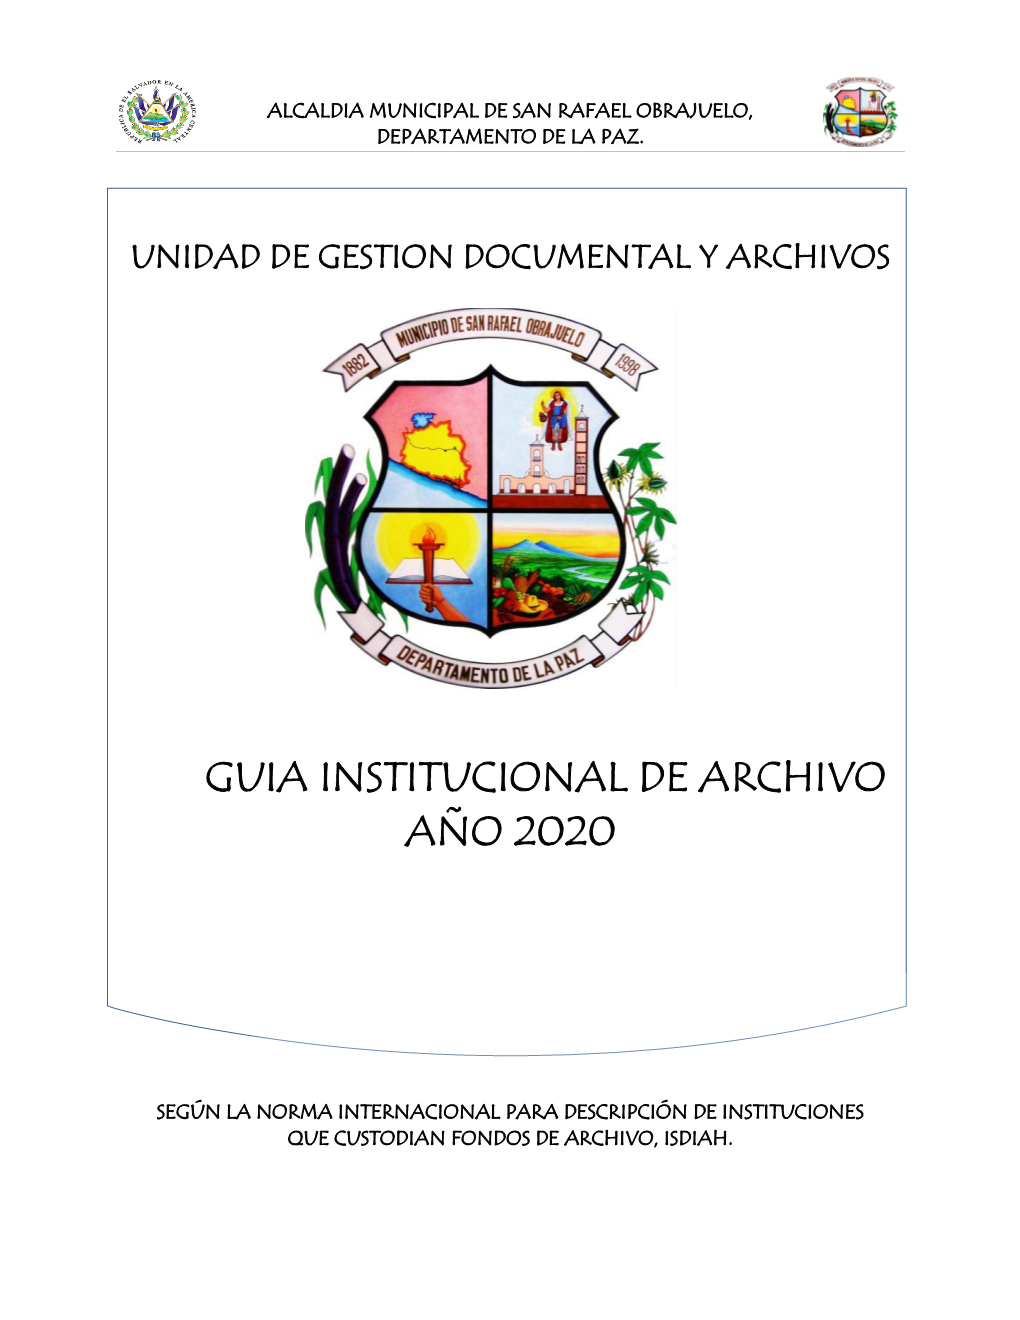 Guia De Archivo Institucional De Alcaldia Mpal De San Rafael